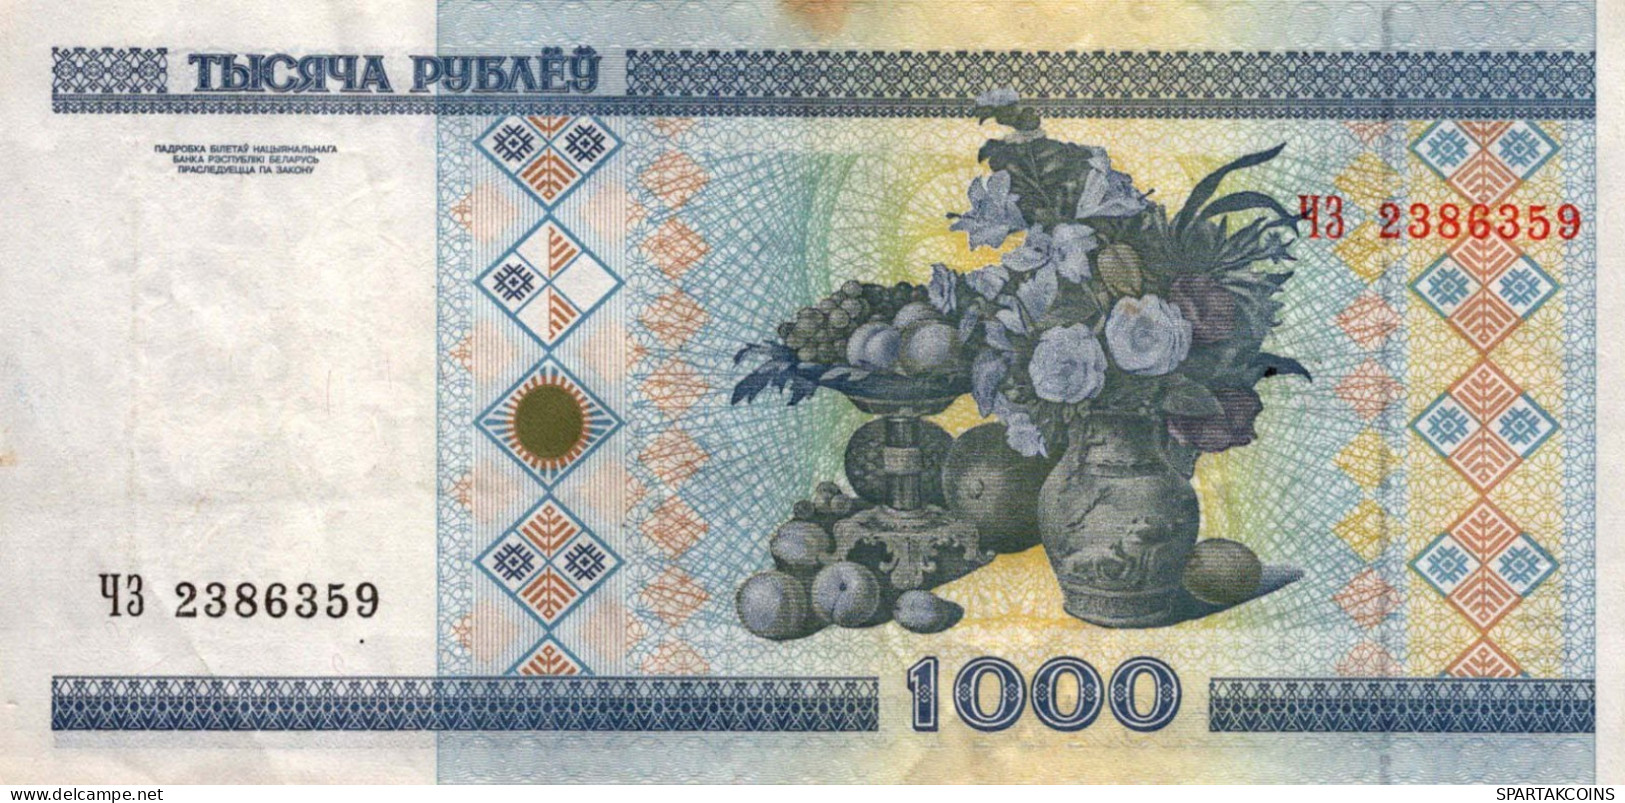 1000 RUBLES 2000 BELARUS Papiergeld Banknote #PK601 - [11] Lokale Uitgaven